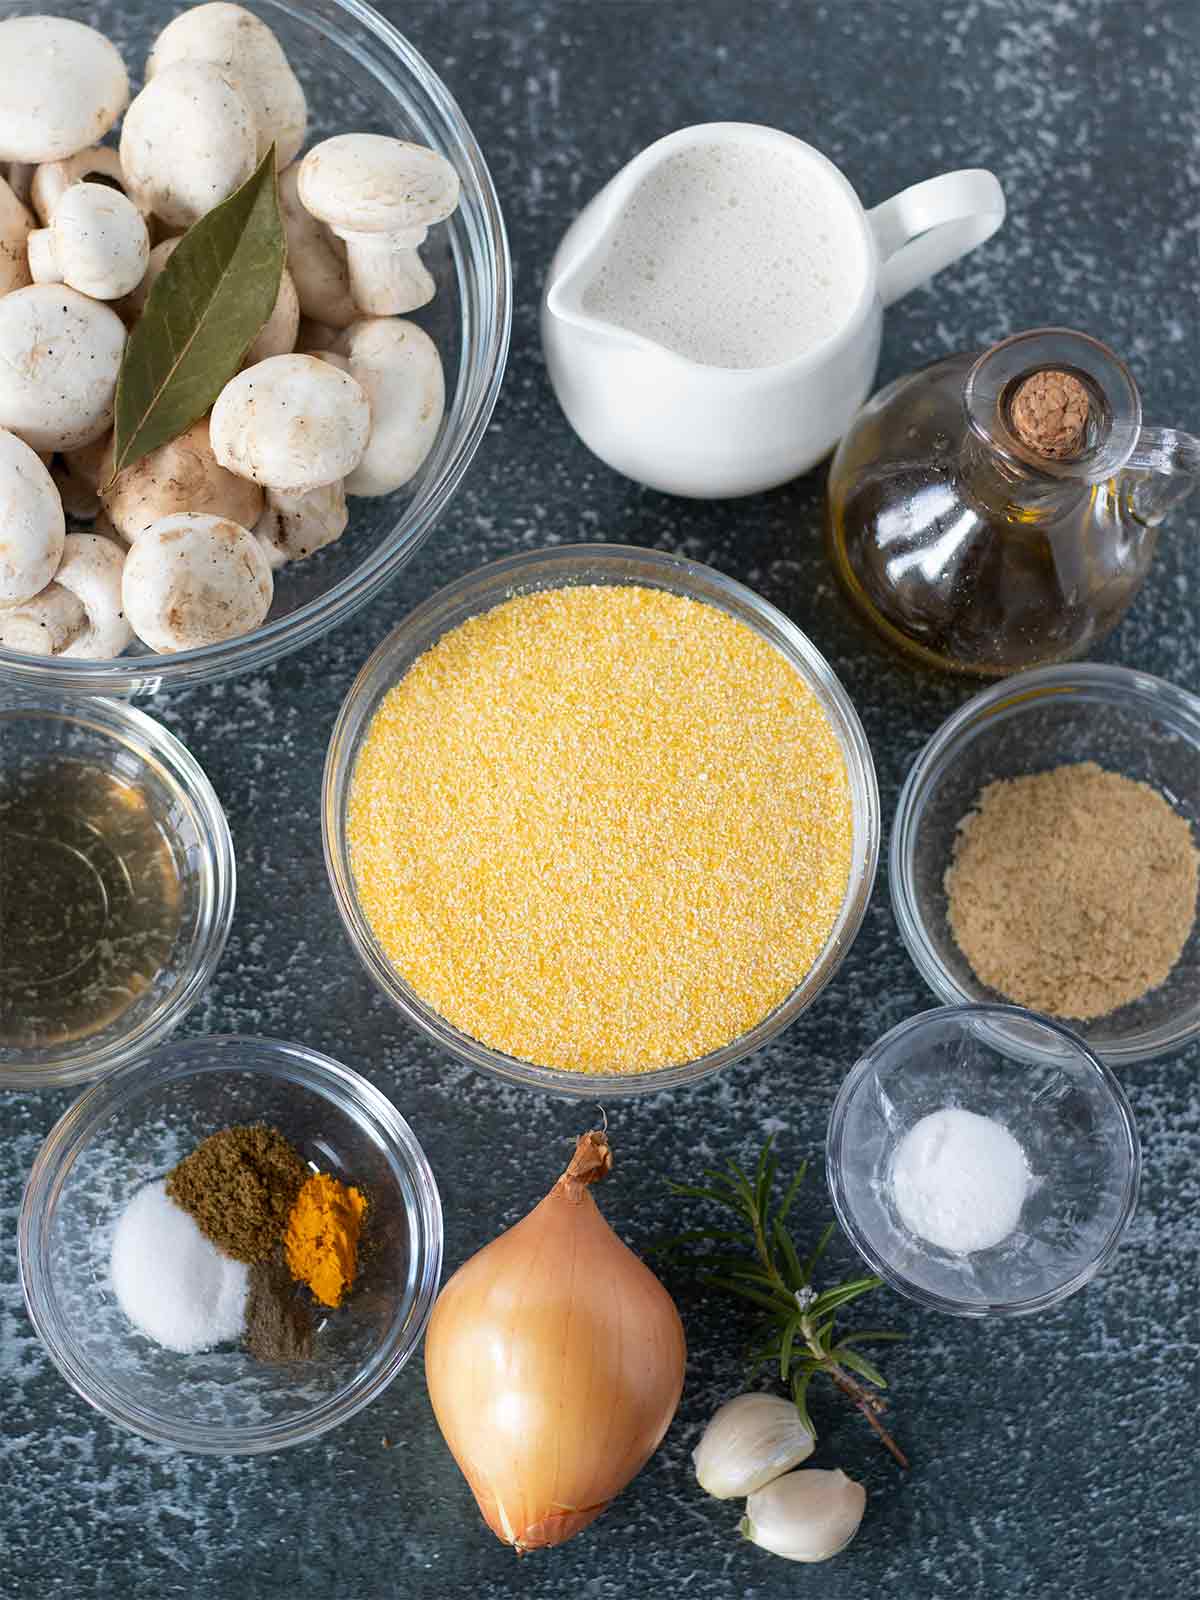 Plant-based ingredients for preparing homemade savory mushroom polenta recipe: polenta, white mushrooms, dairy-free milk, olive oil, onion, garlic, nutritional yeast, white wine, salt and spices